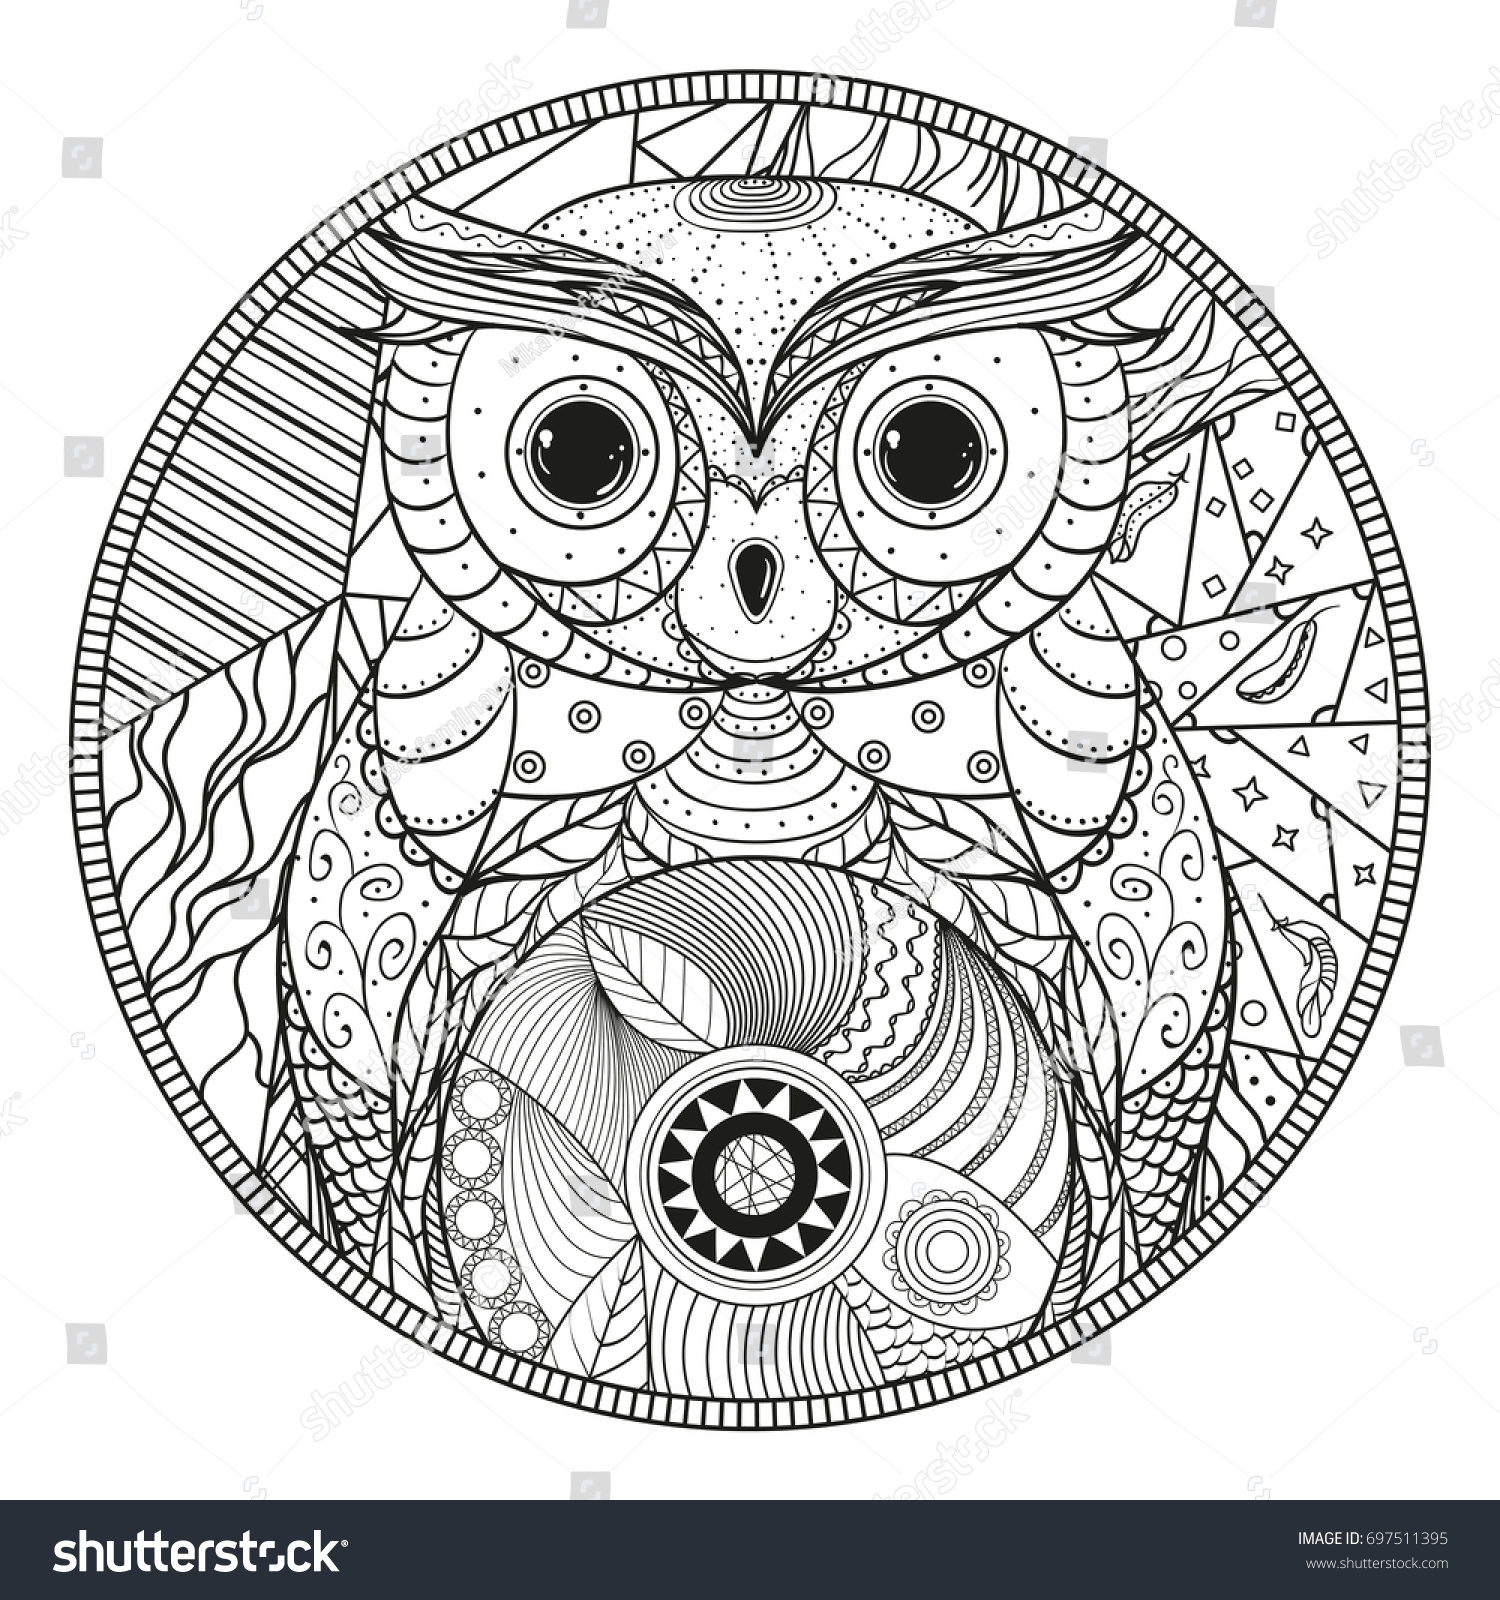 Download Owl Mandala Zentangle Hand Drawn Circle Stock Vector ...